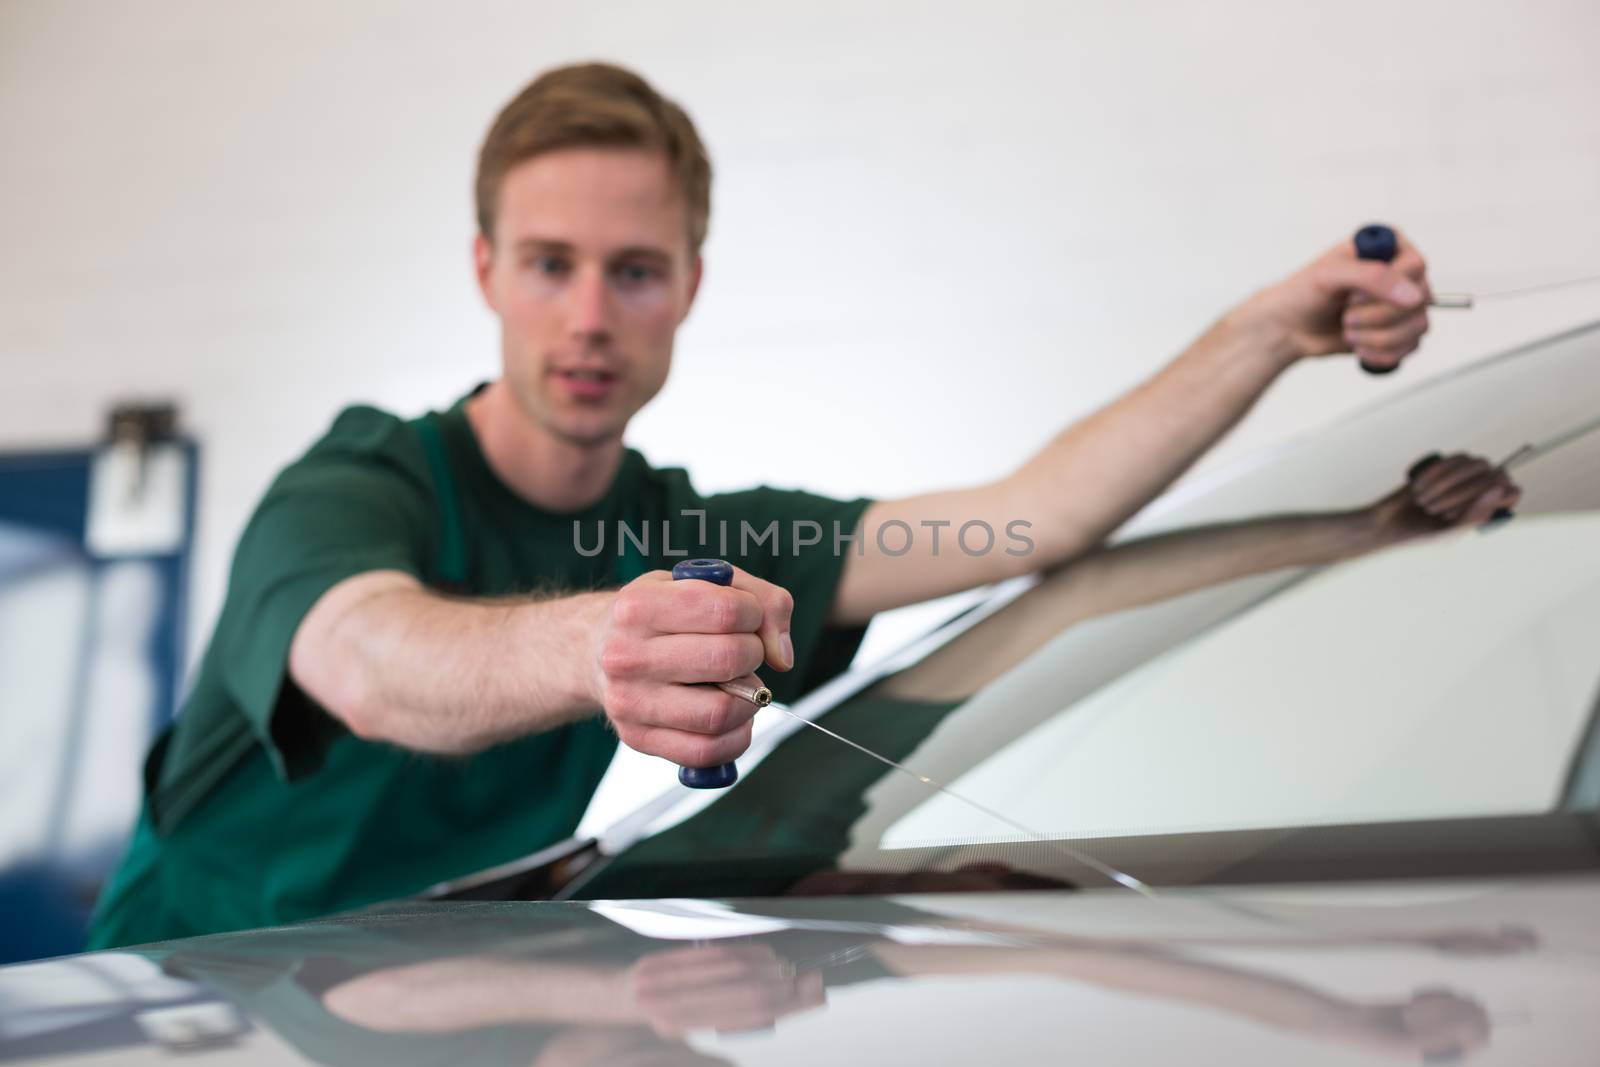 Glazier removing windshield by ikonoklast_fotografie